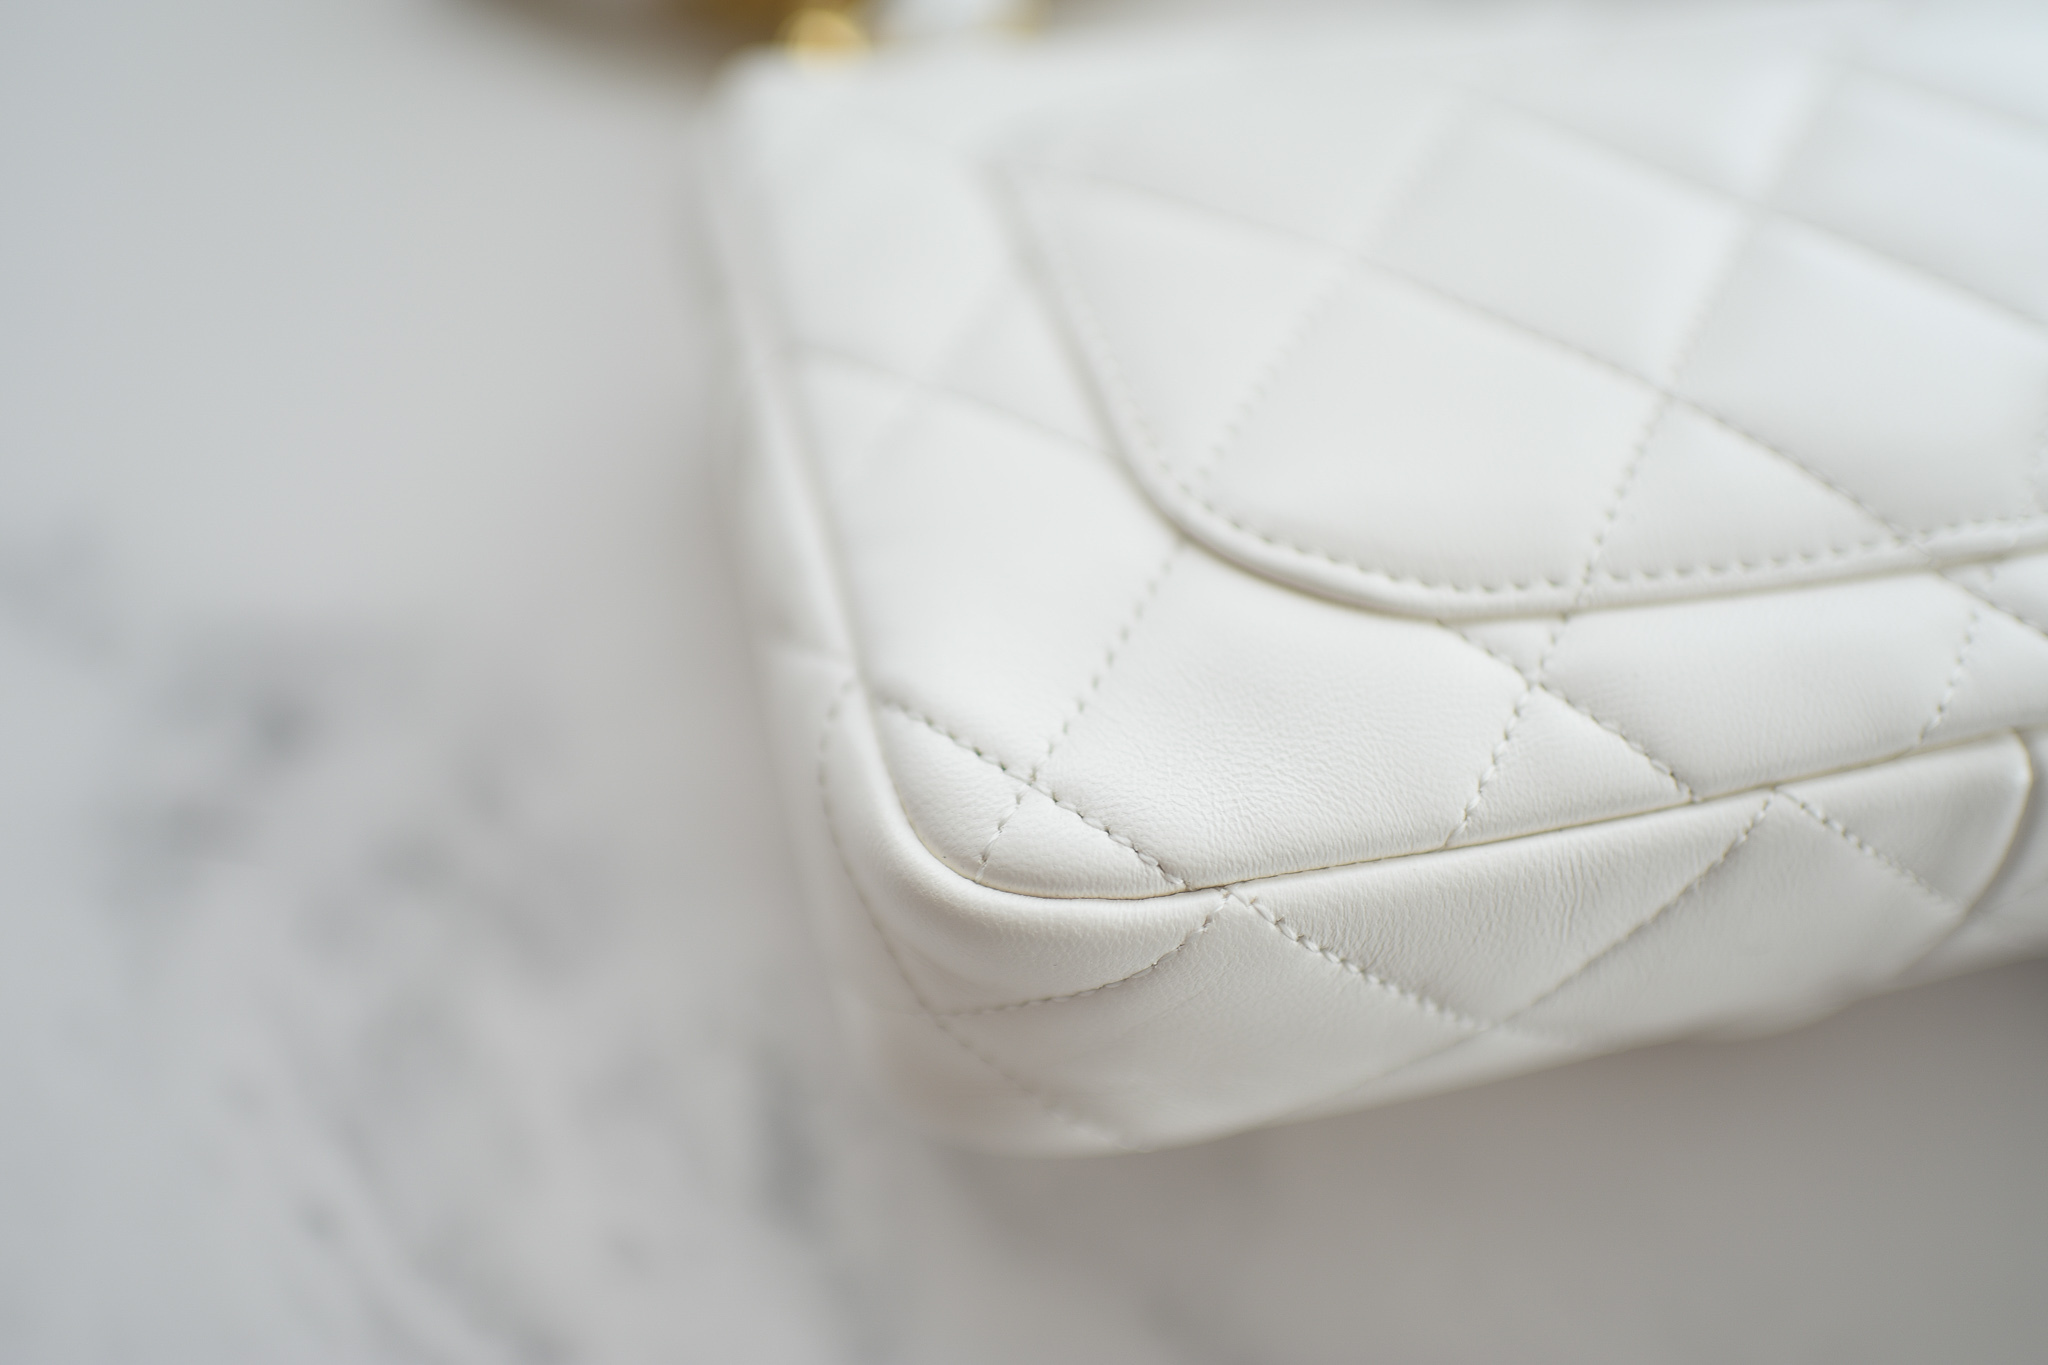 Chanel Seasonal Flap Tweed, White, Gold Hardware – Now You Glow